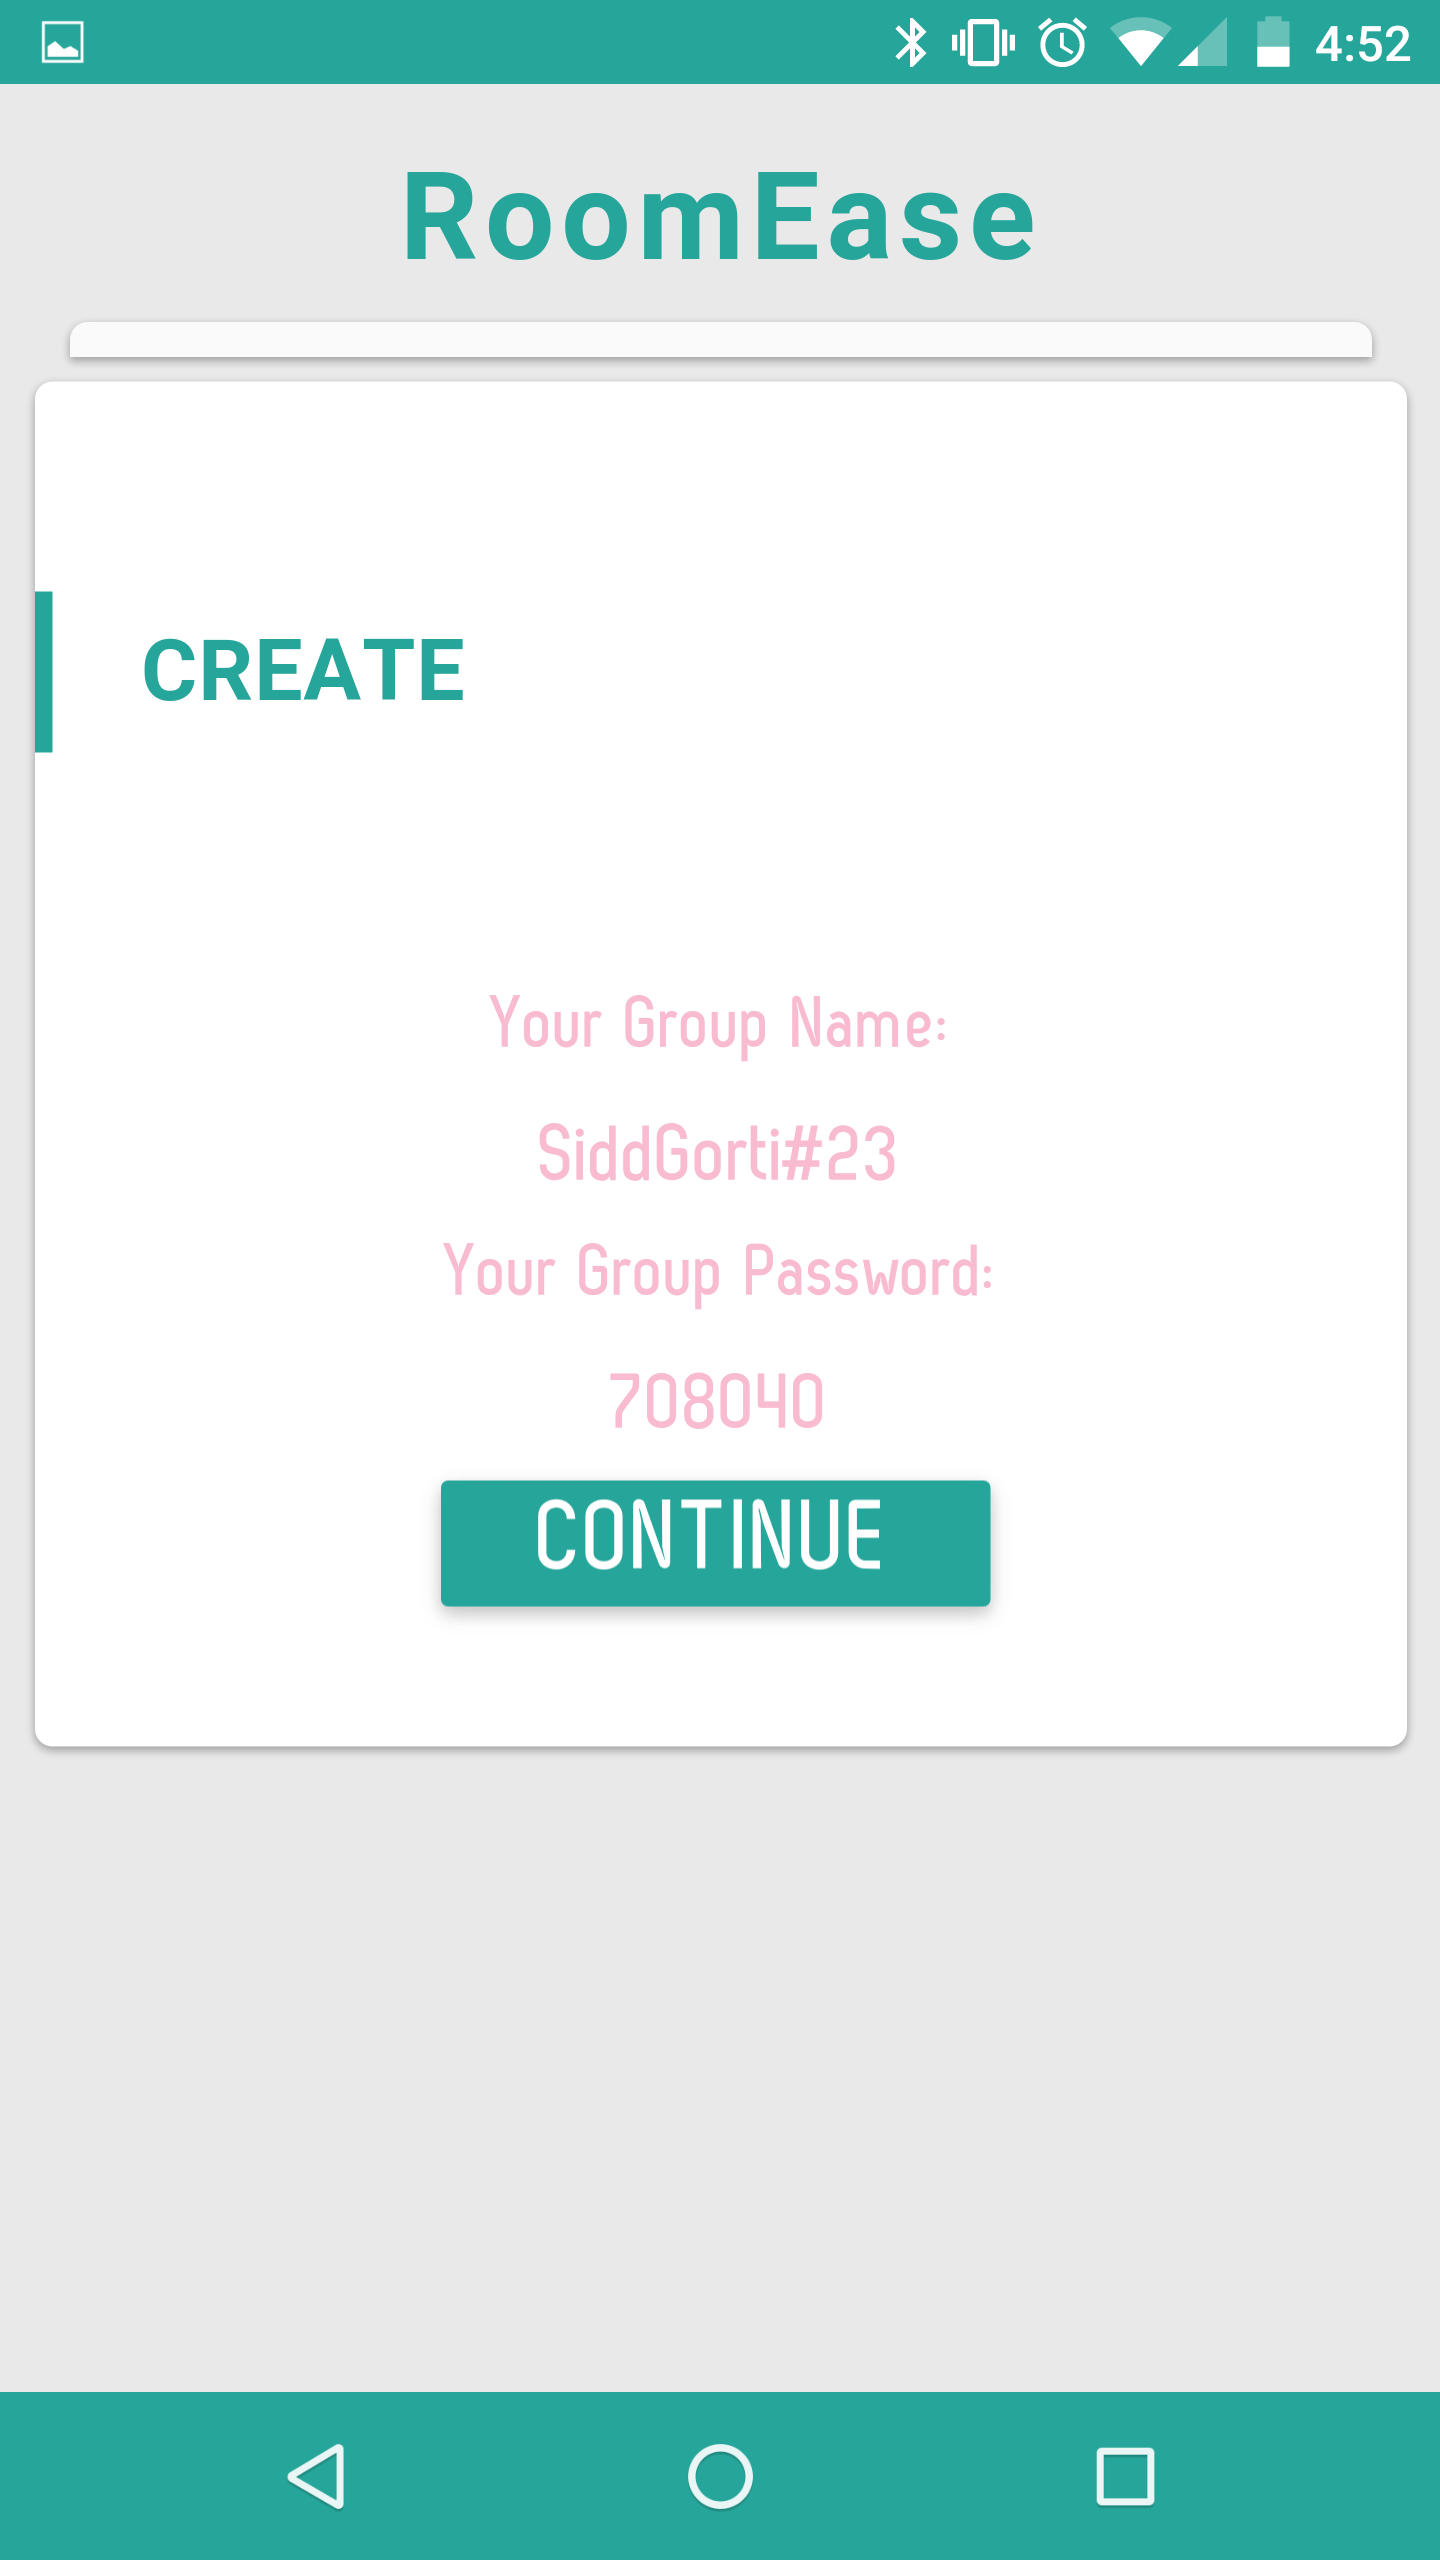 Created Group Info